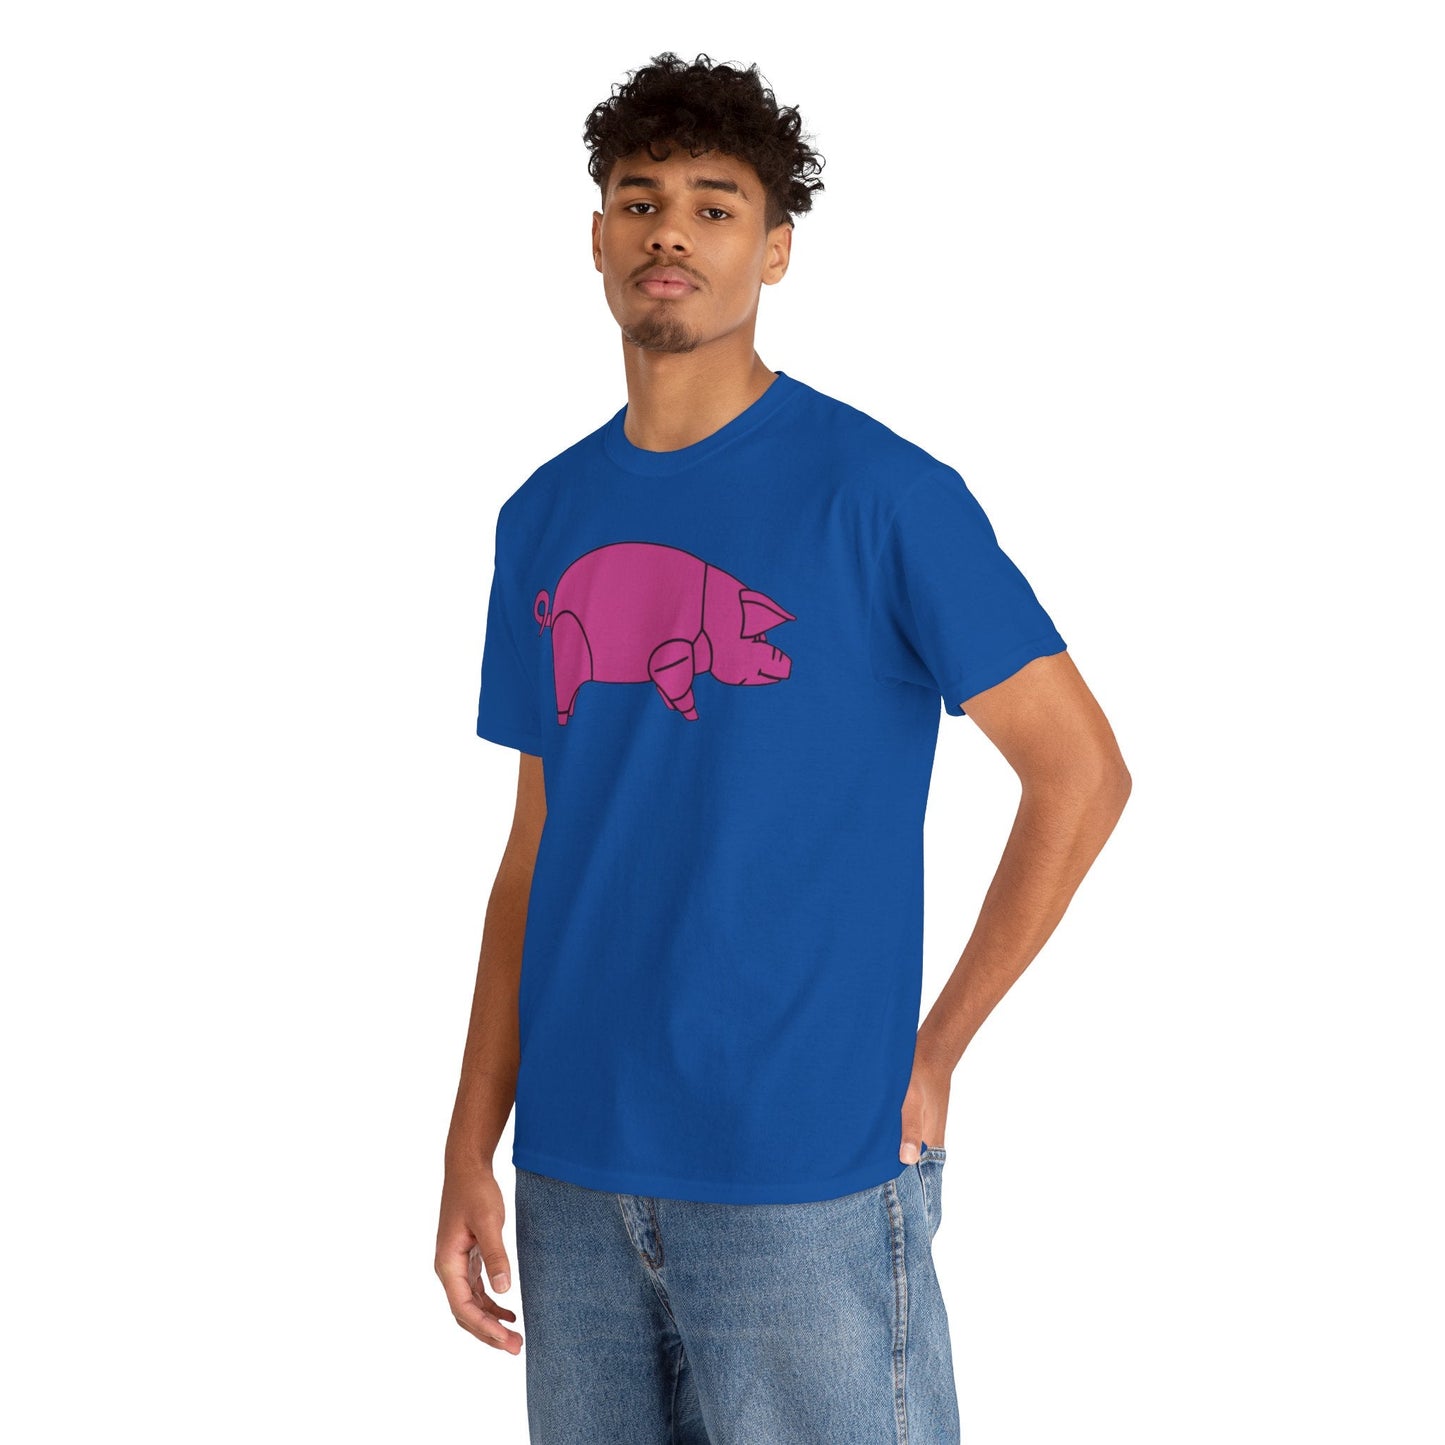 Pig shirt as worn by David Gilmour of Pink Floyd T-Shirt - RetroTeeShop